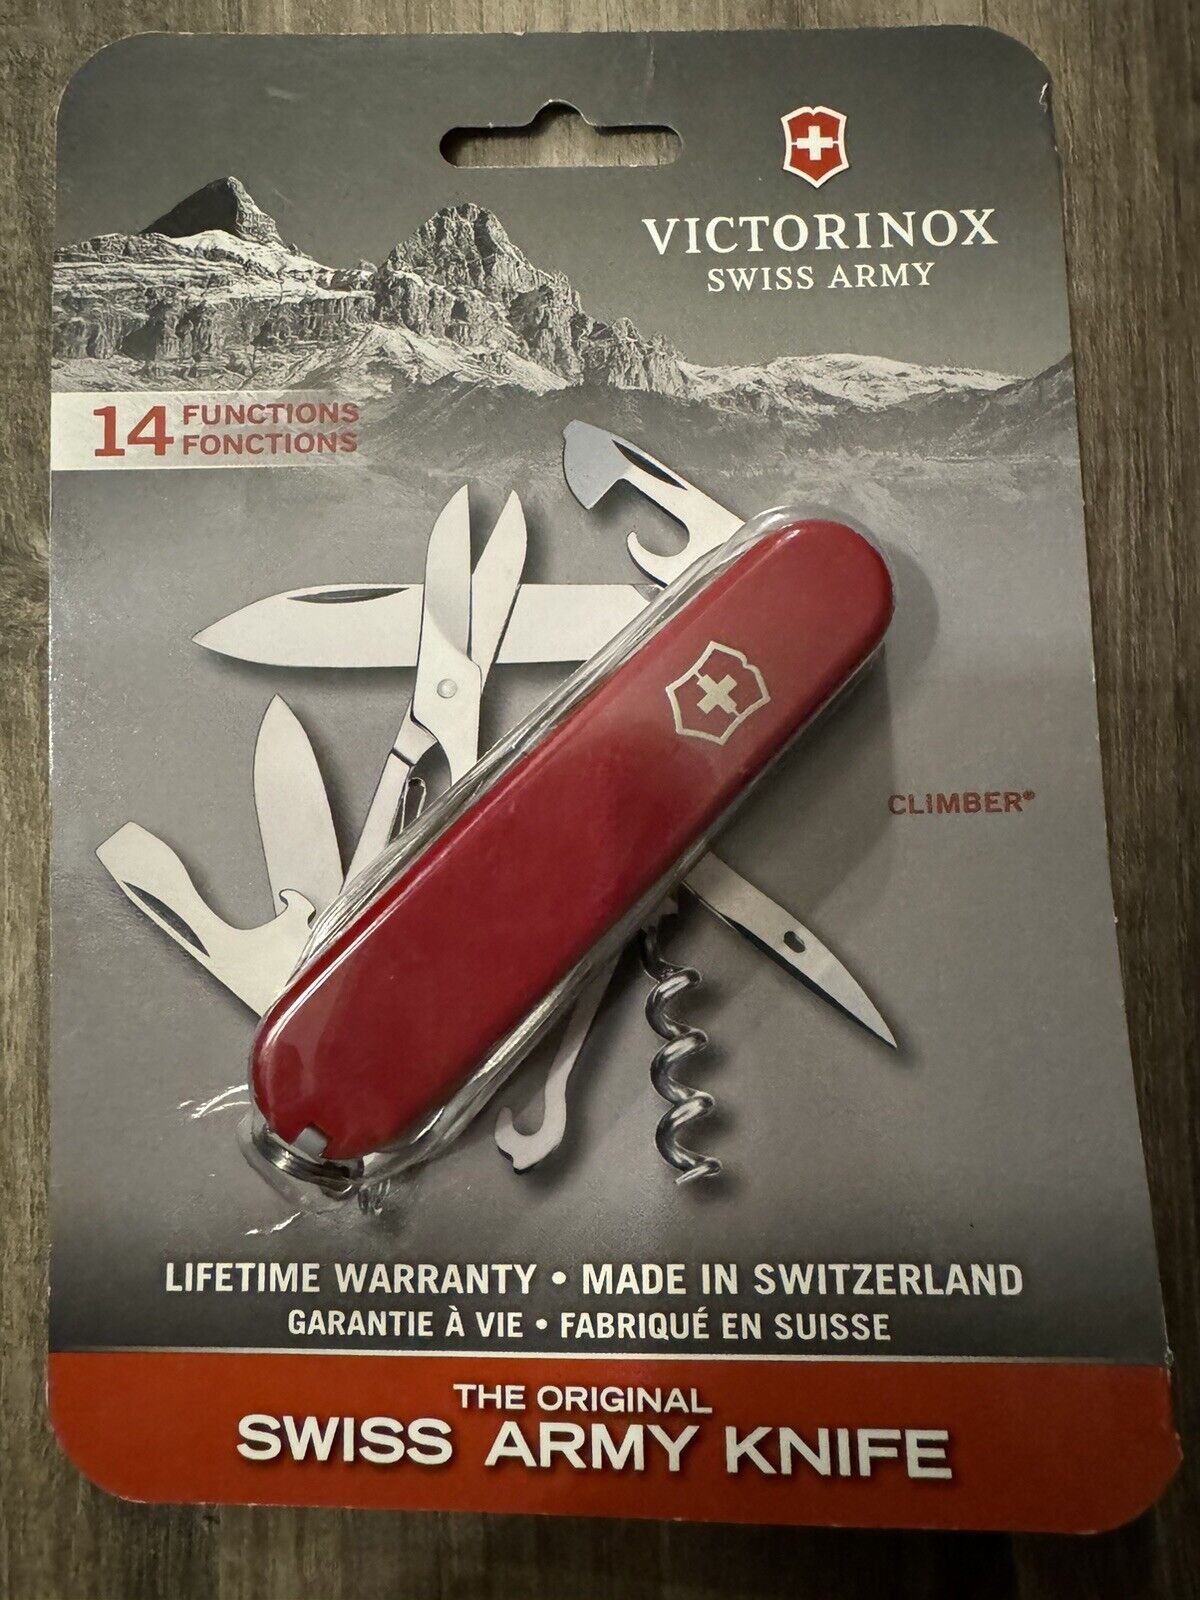 Victorinox 14 function Swiss Army Knife # 1.3703.B1-X1 Red Climber (H-C6)